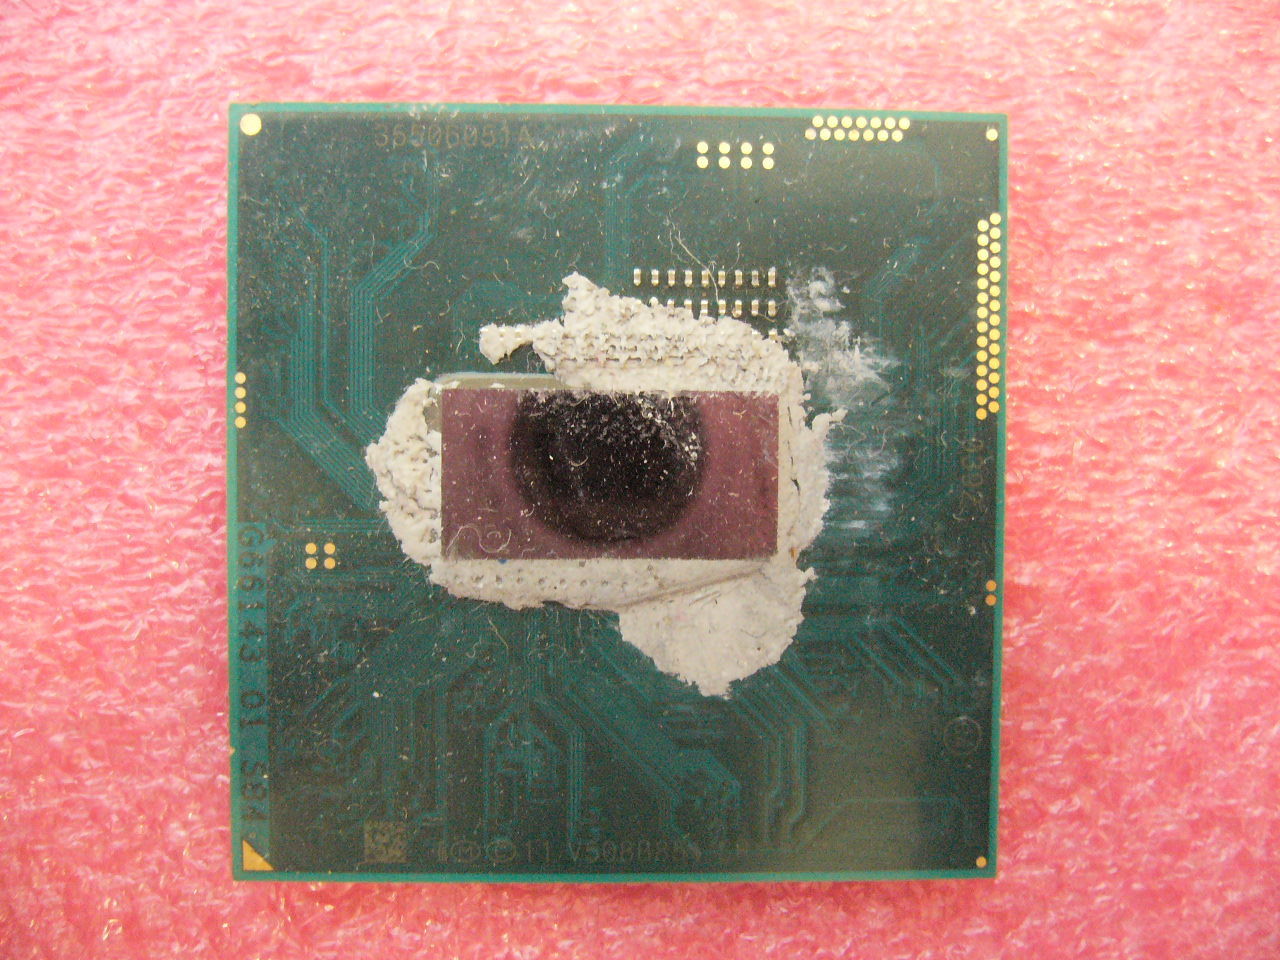 QTY 1x Intel CPU i7-4610M Dual-Core 3.0 Ghz rPGA946 SR1KY Socket G3 NOT WORKING - zum Schließen ins Bild klicken